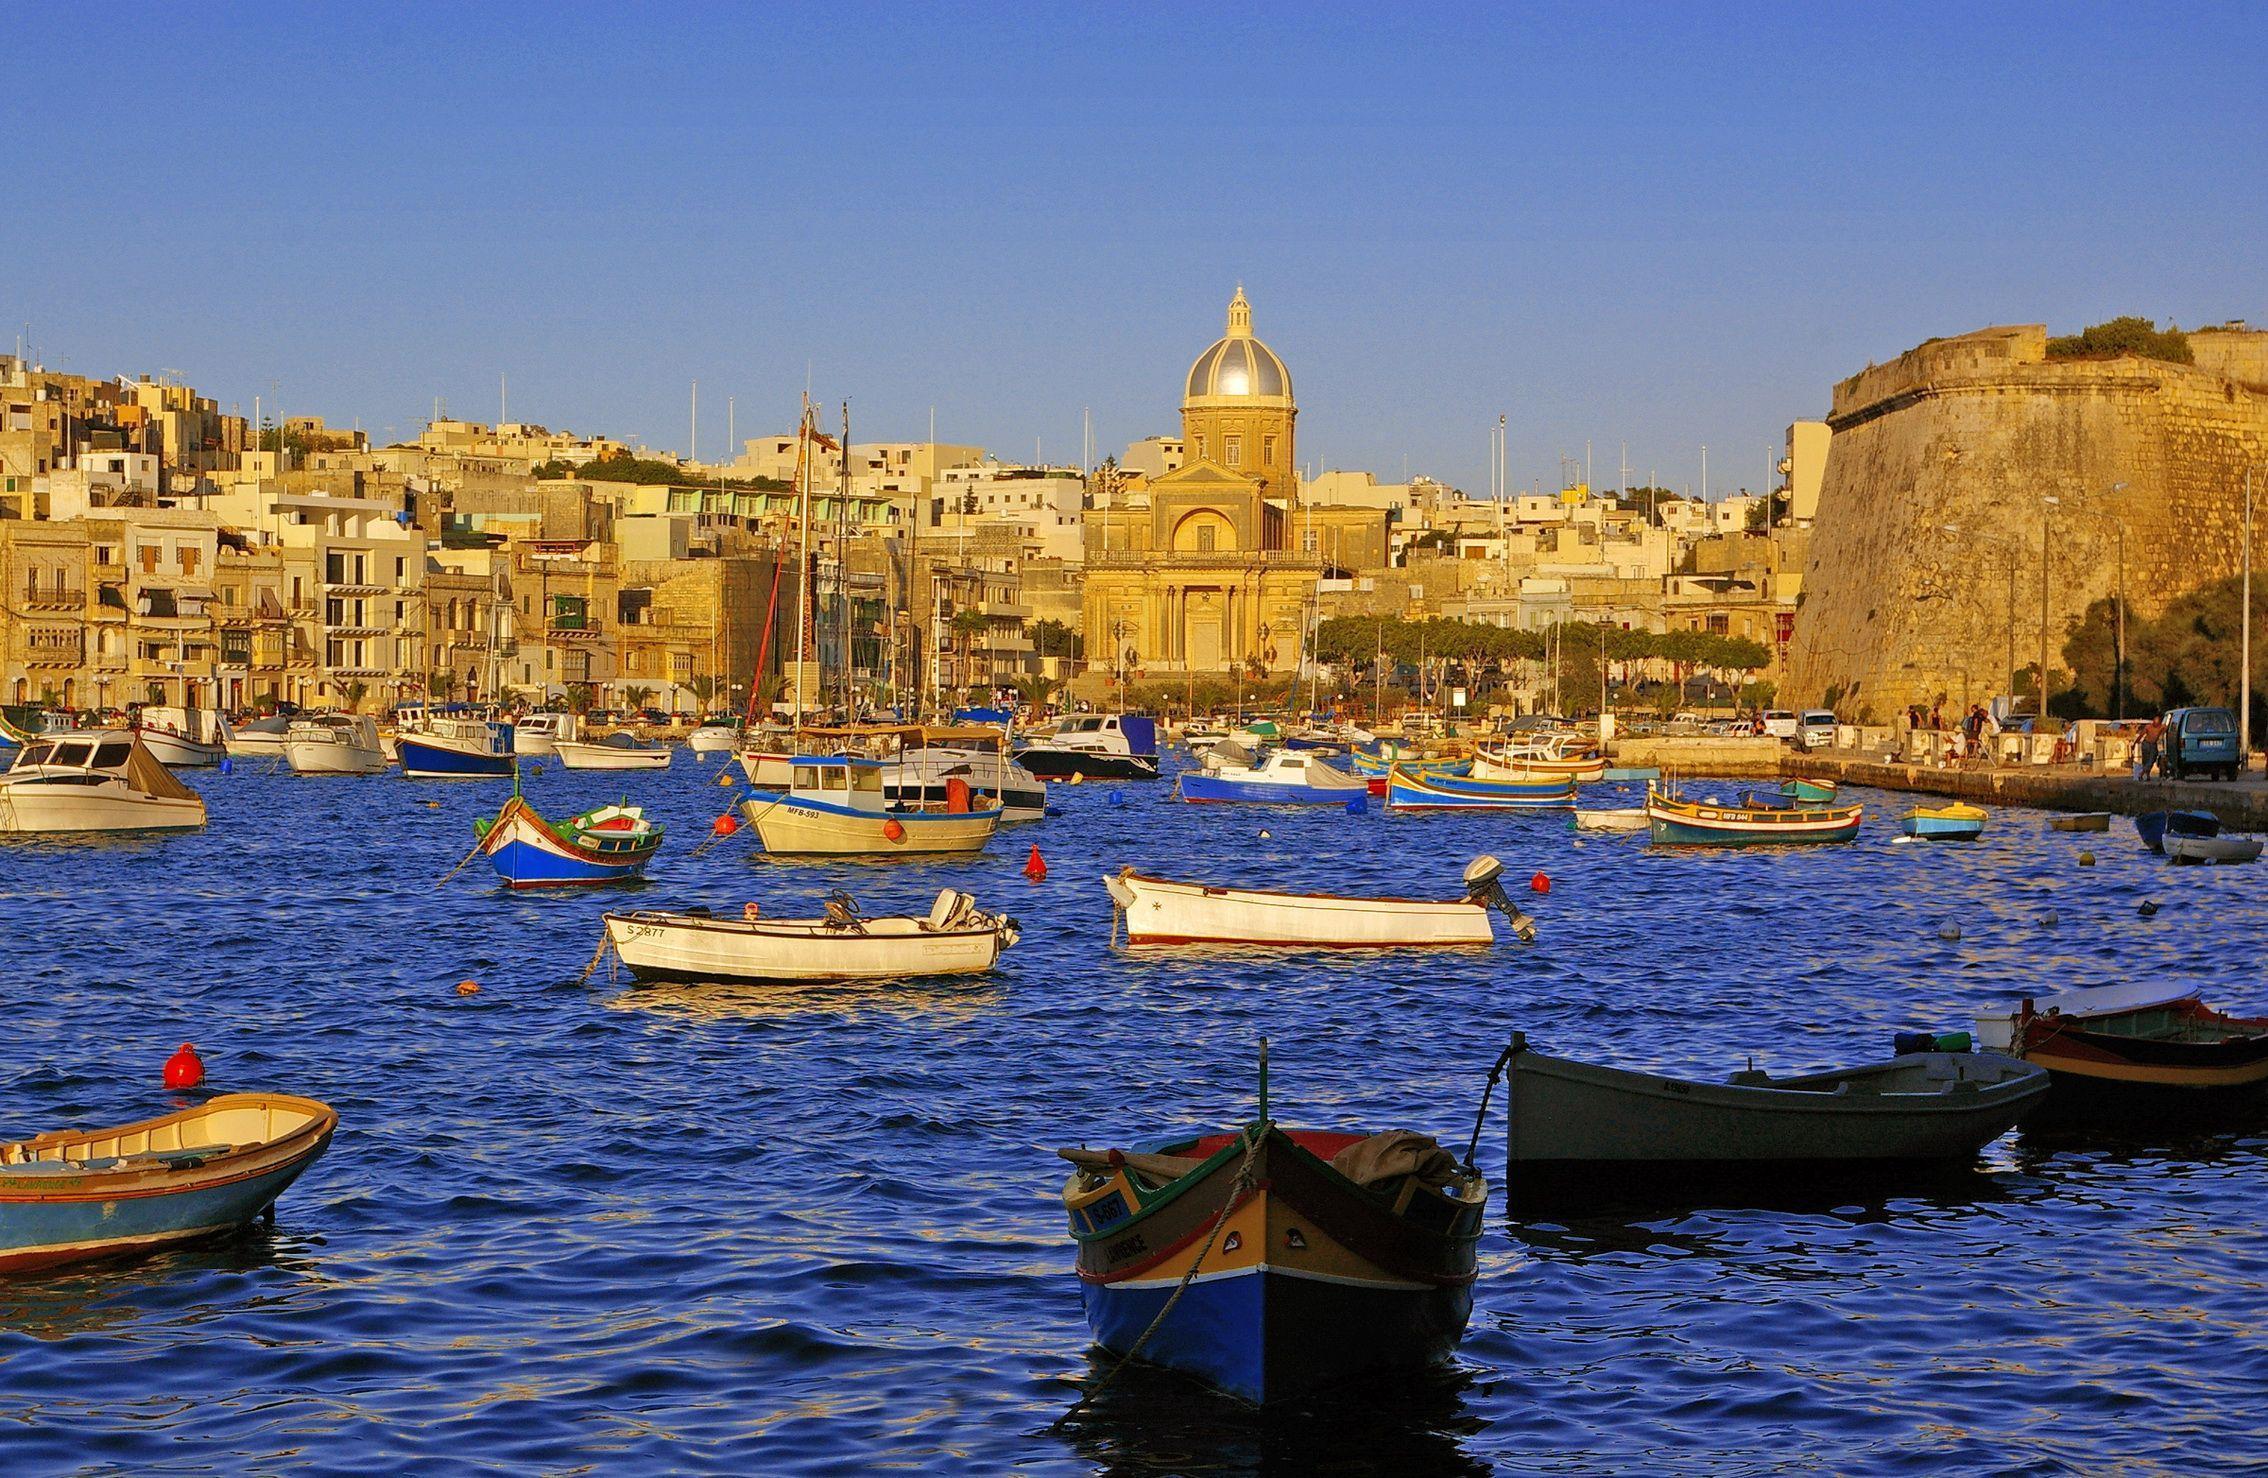 Malta Kalkara Boats Cities 2268x1478